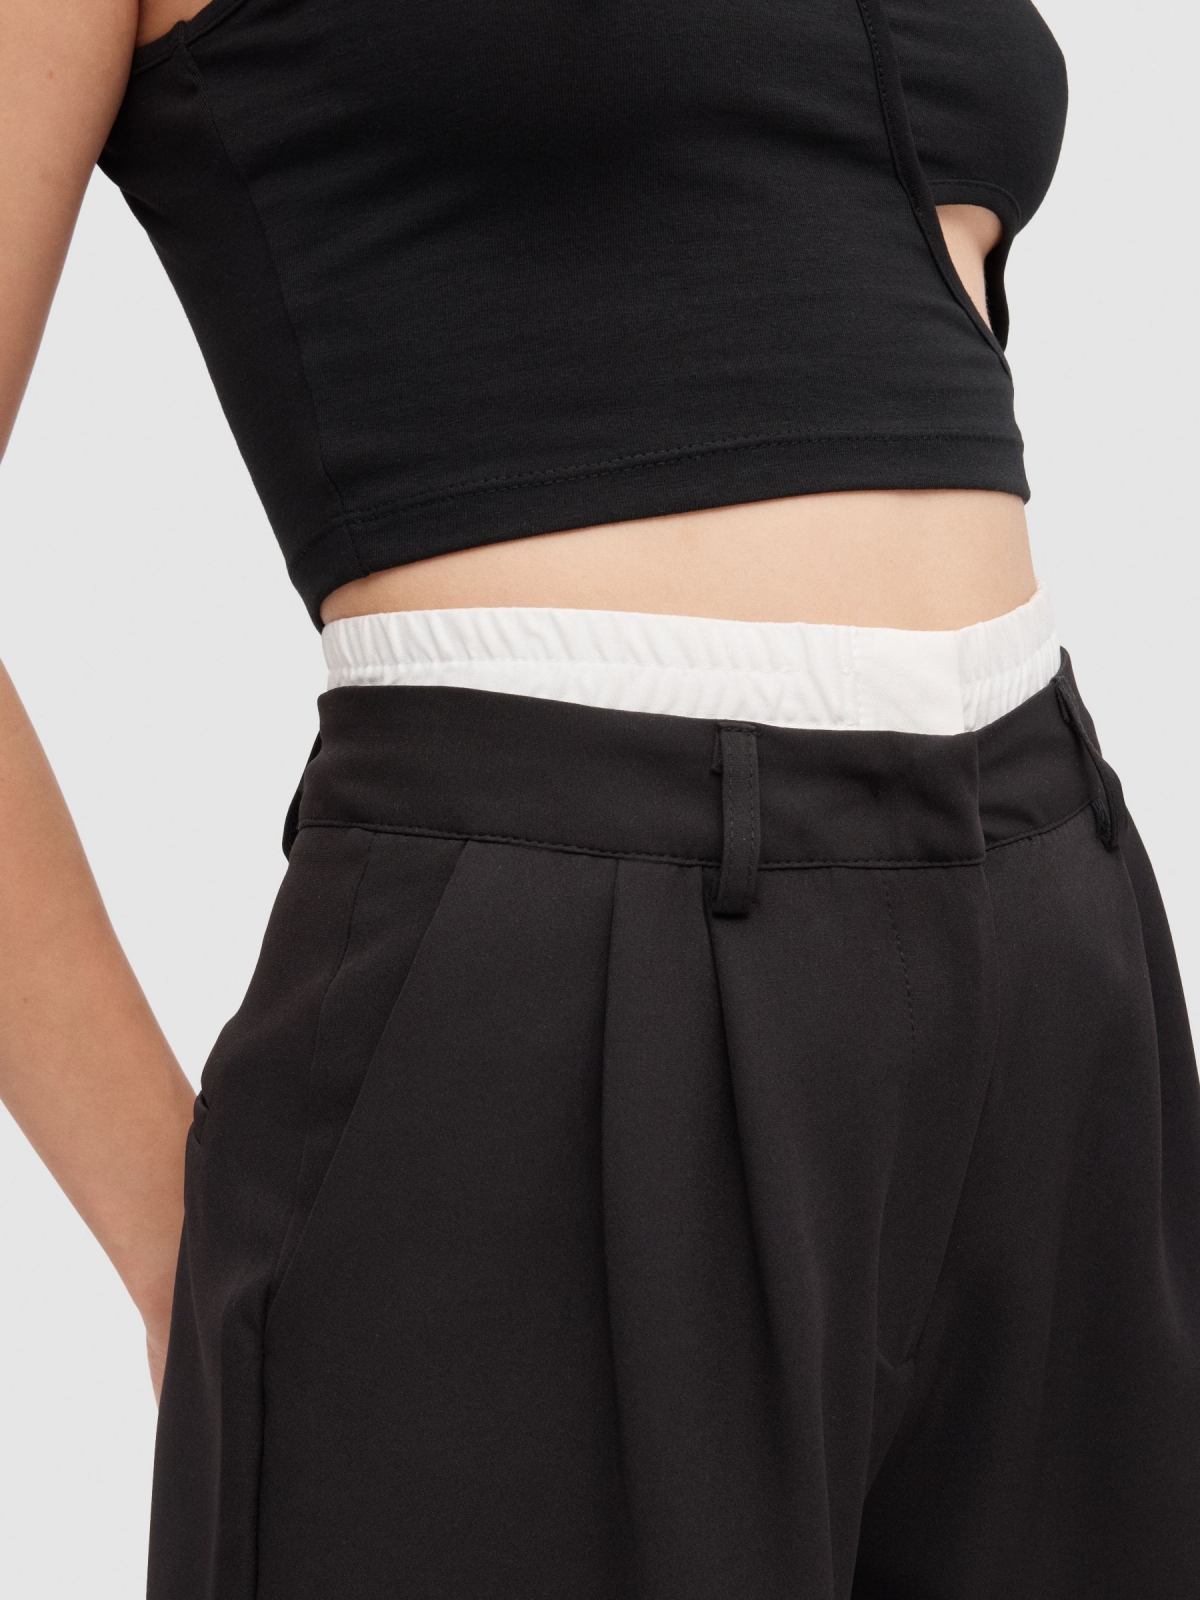 Ruffled waistband Tailoring  pants black detail view